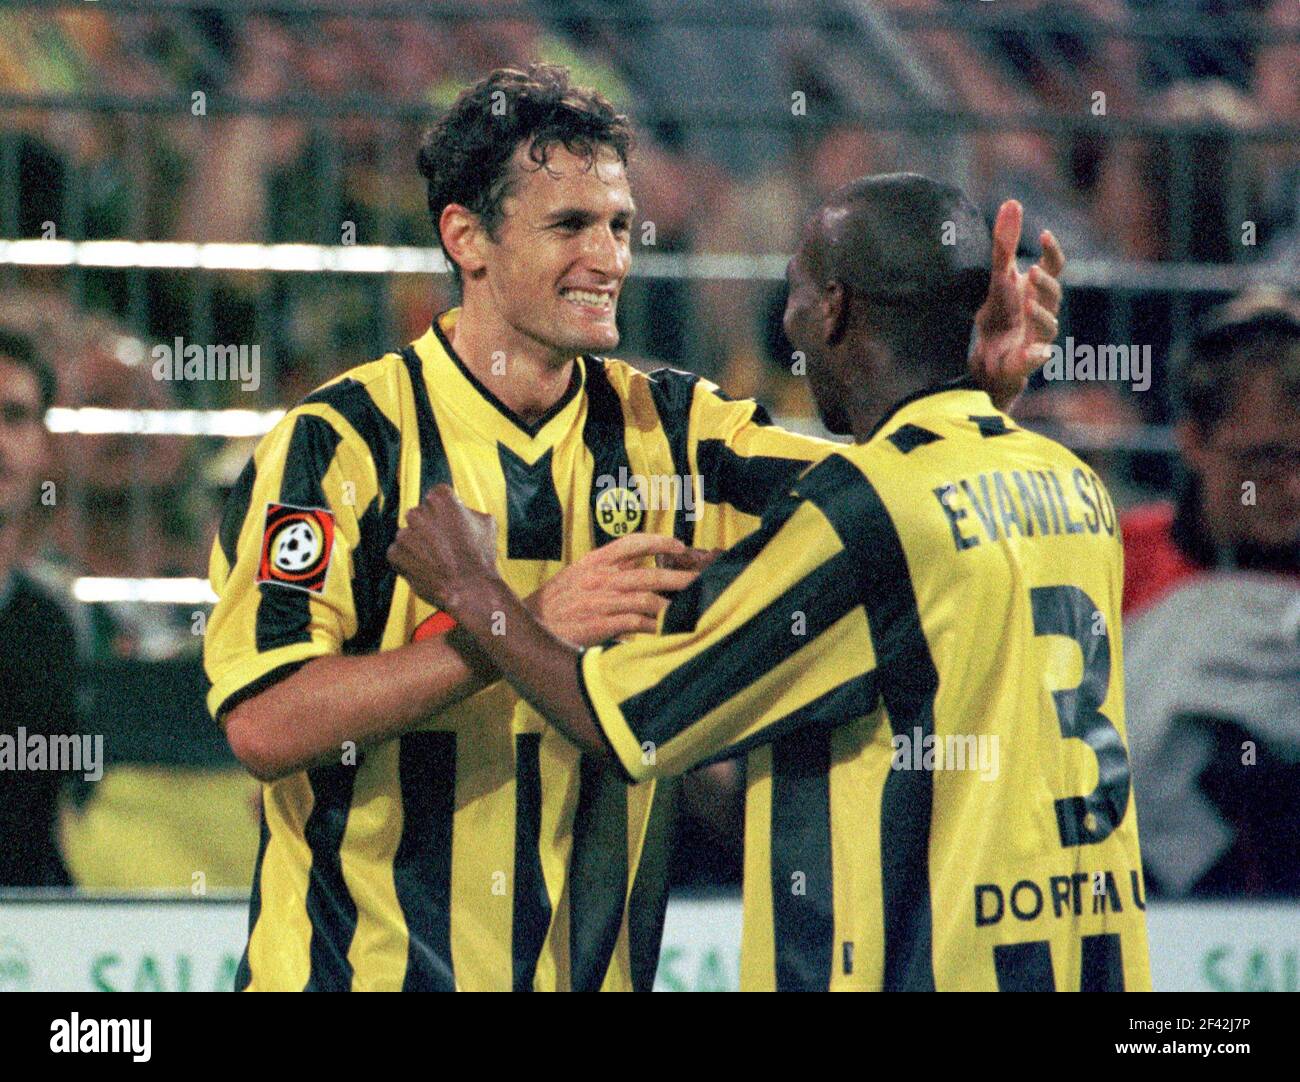 Dortmund, Germany 11.8. 2000, Football:  Bundesliga season 2000/01,  Borussia Dortmund (BVB, yellow) vs Hansa Rostock (HRO, white) 1:0 - Heiko HERRLICH (BVB), EVANILSON (HRO) Stock Photo